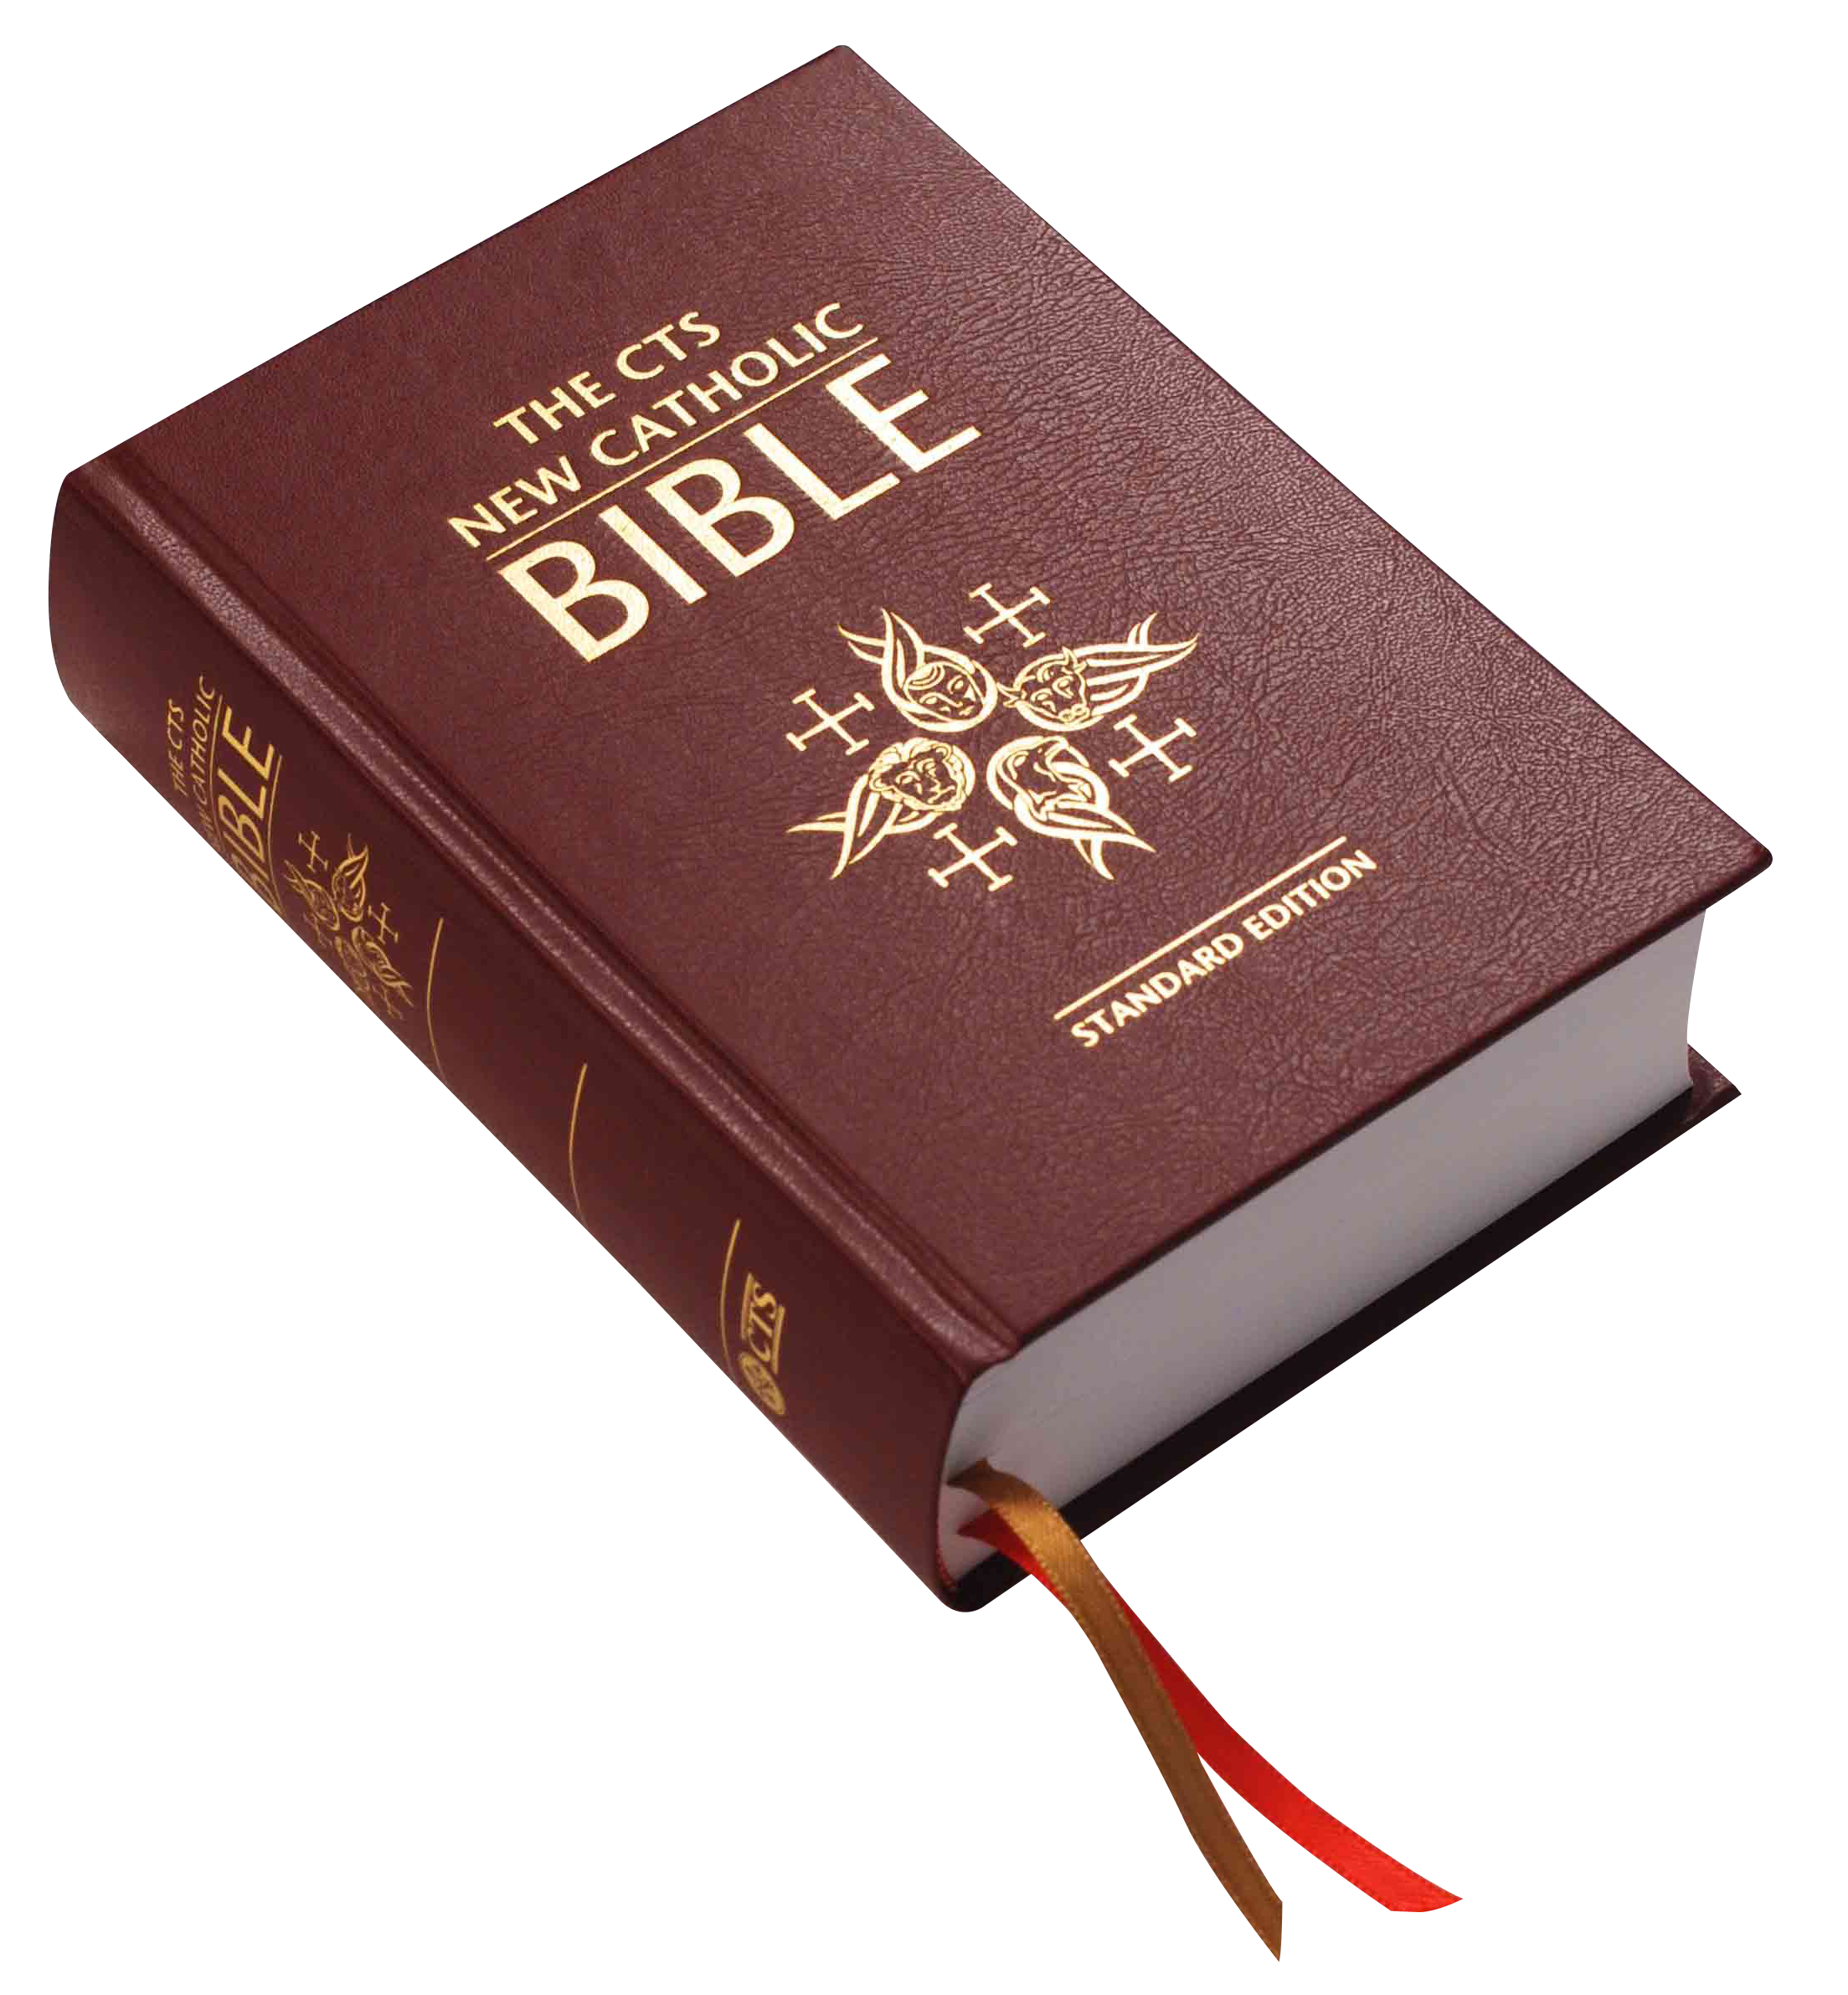 Bible study Christianity - op